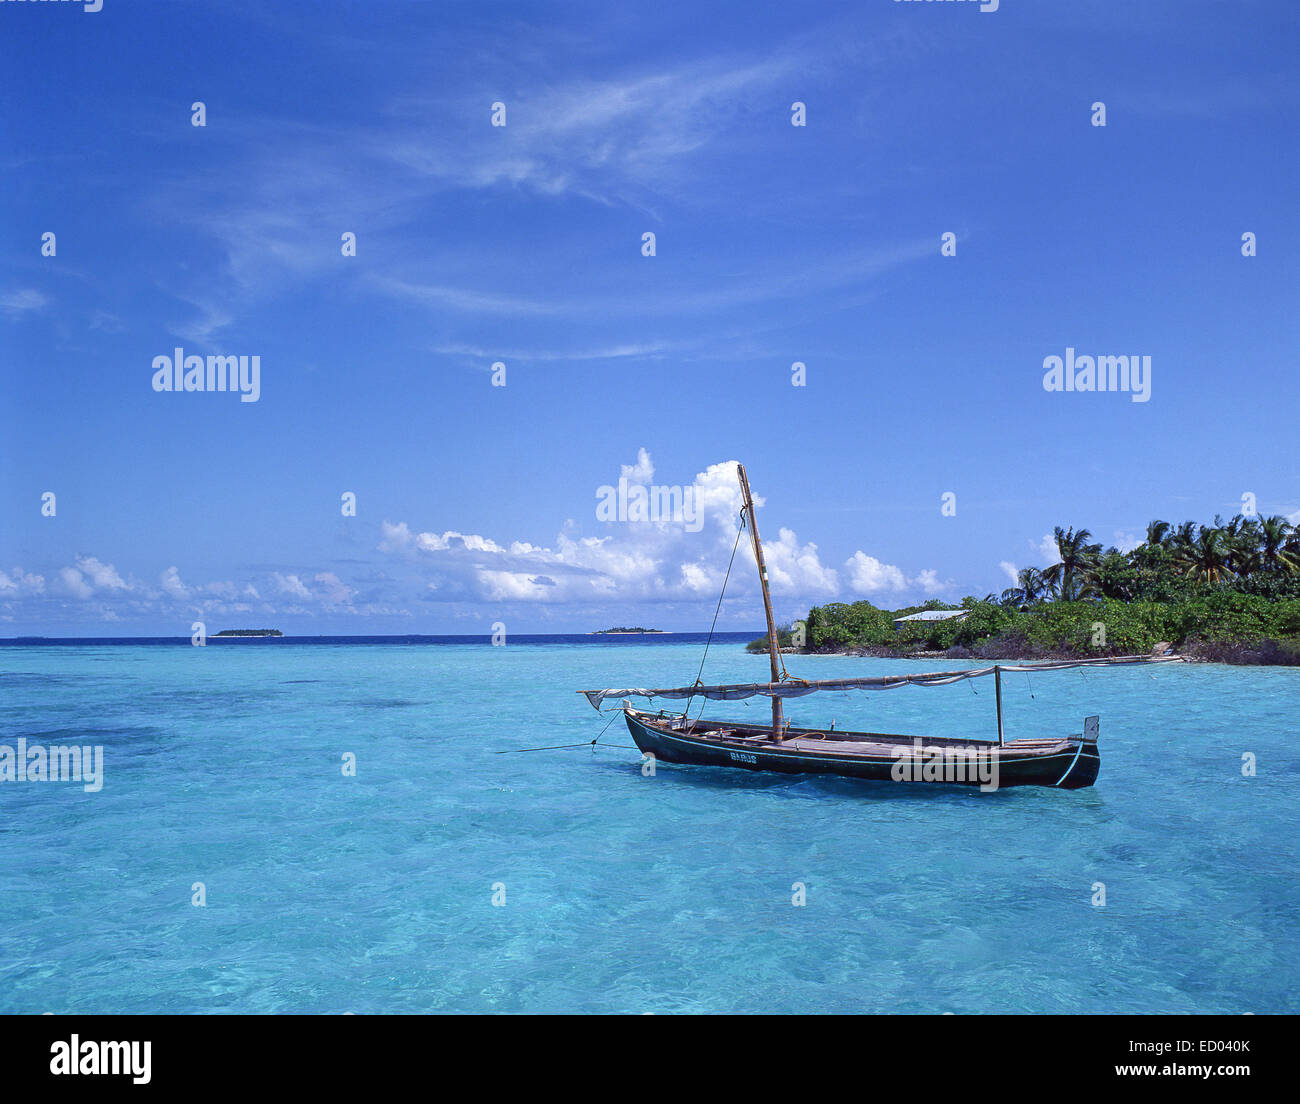 Des bateau de pêche, l'Atoll de Kaafu, Bandos, République des Maldives Banque D'Images